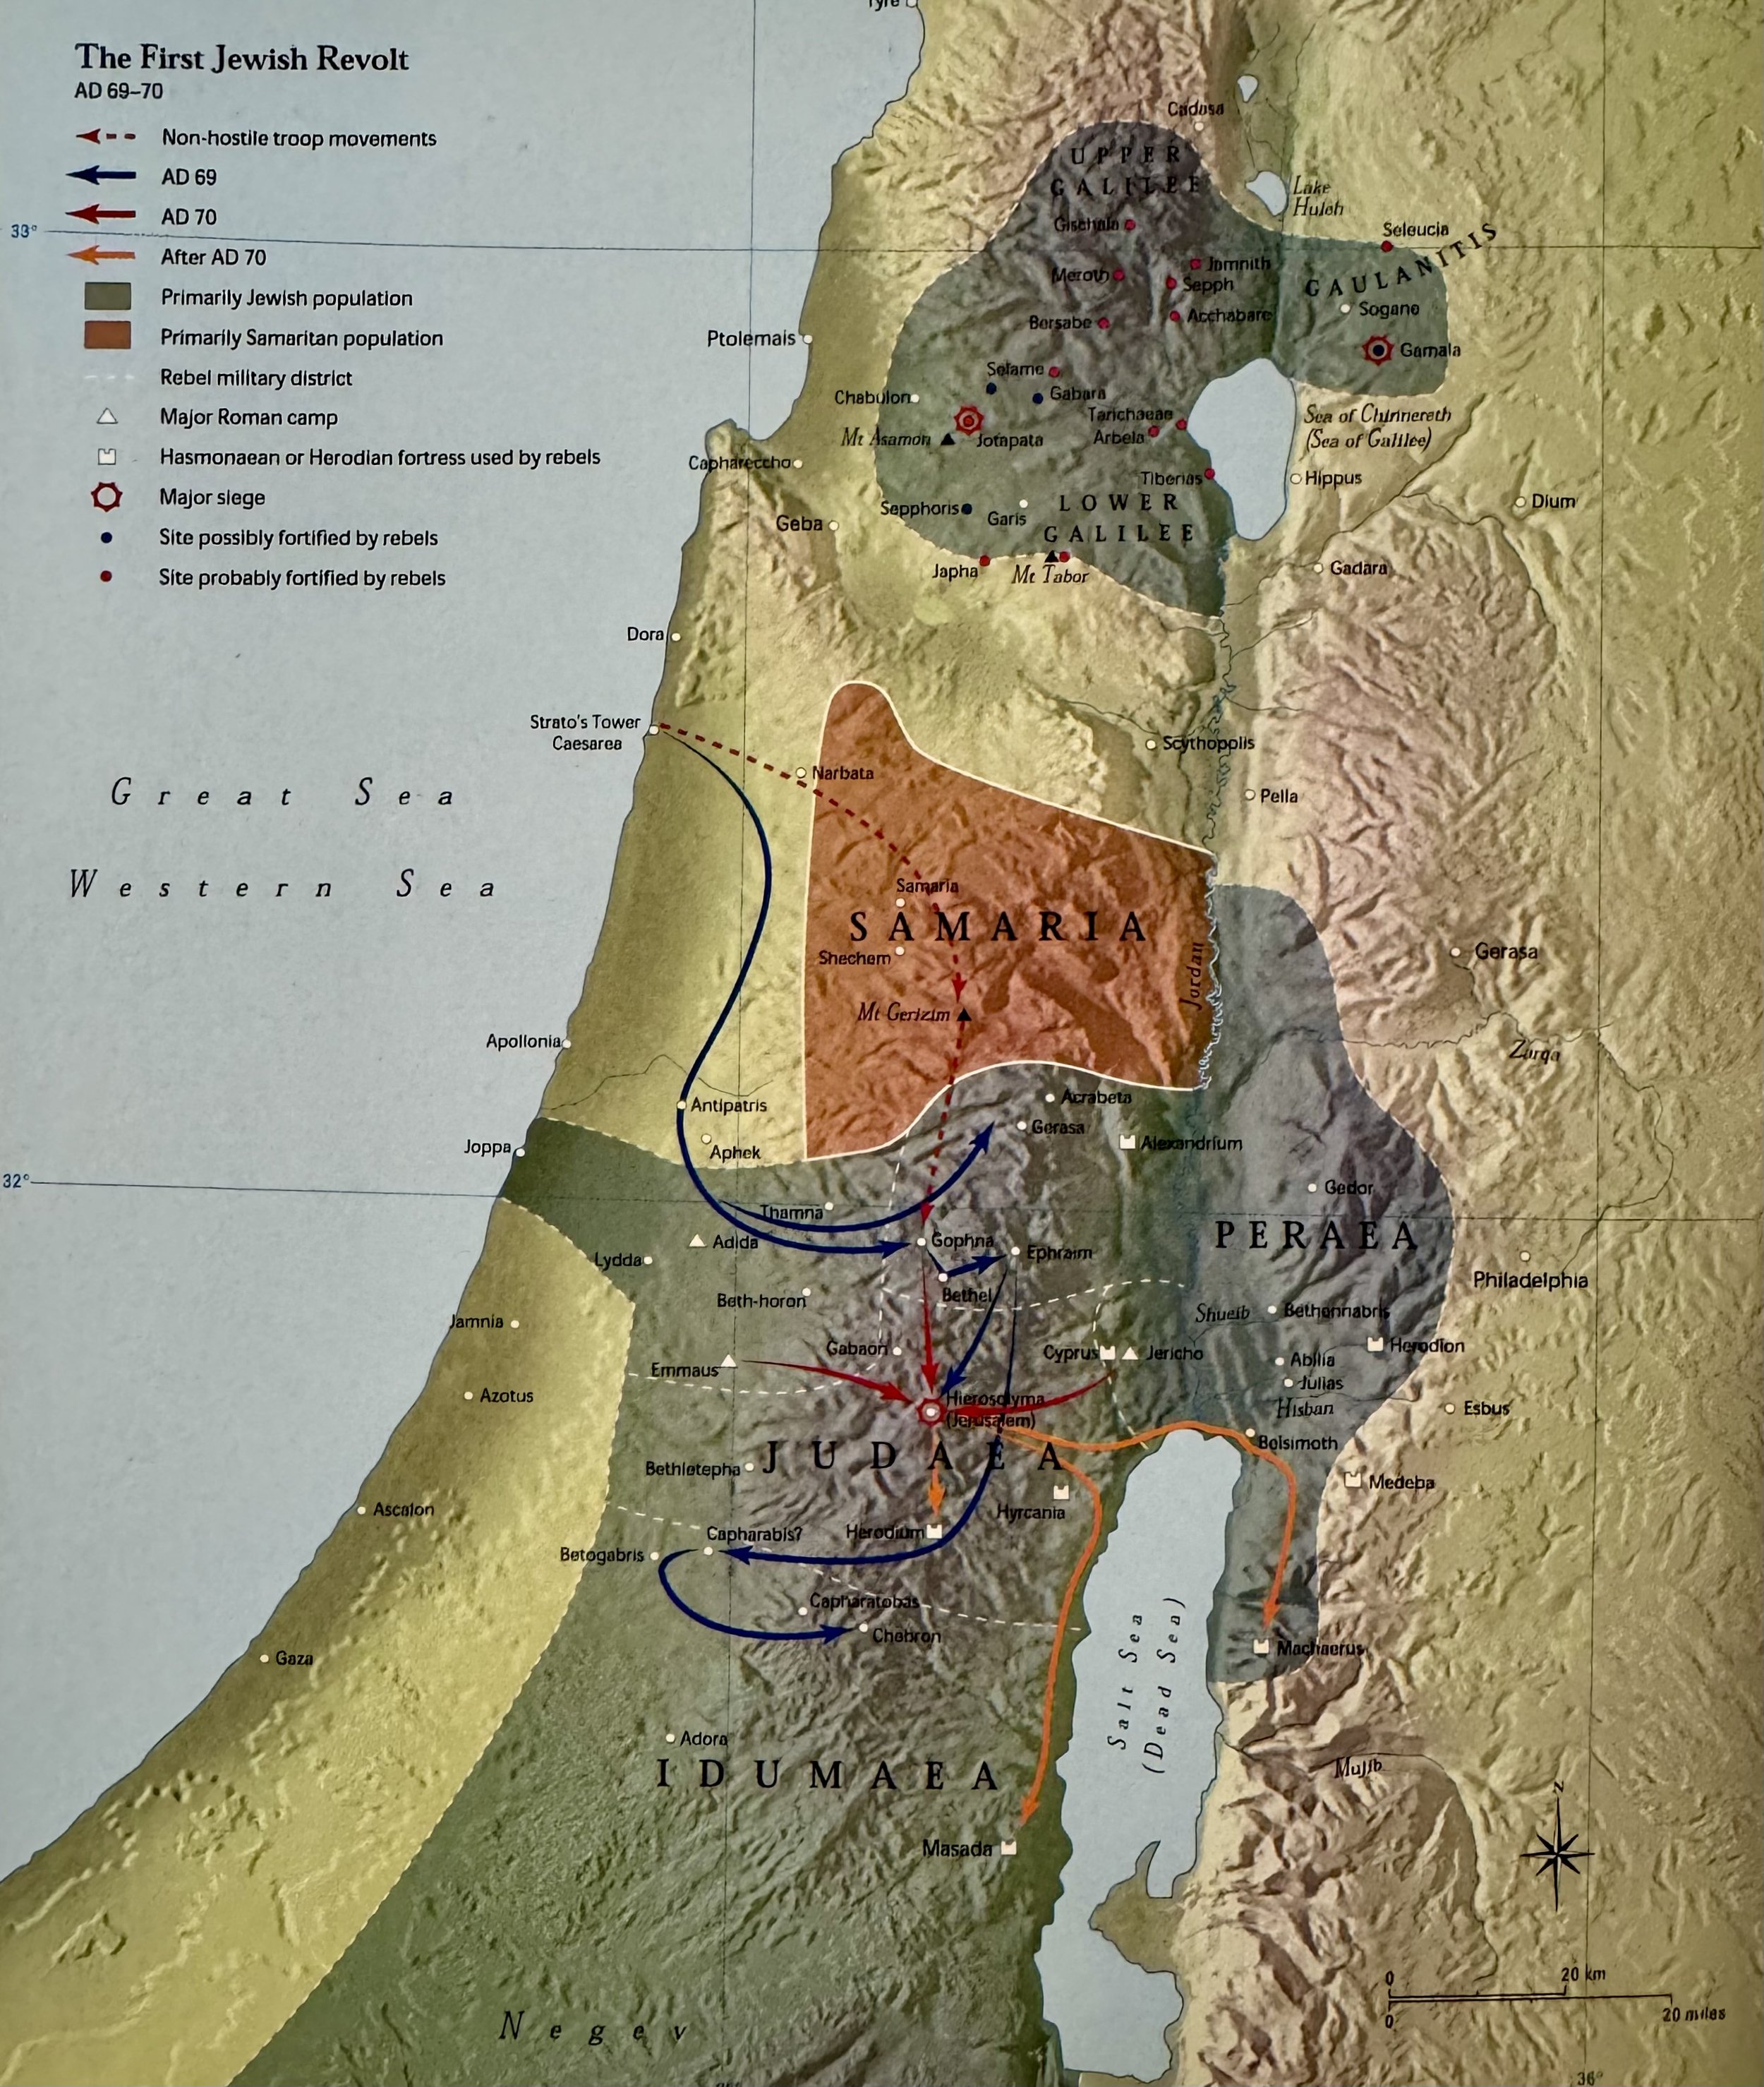 69-70 First Jewish Revolt Atlas of the Bible.jpeg